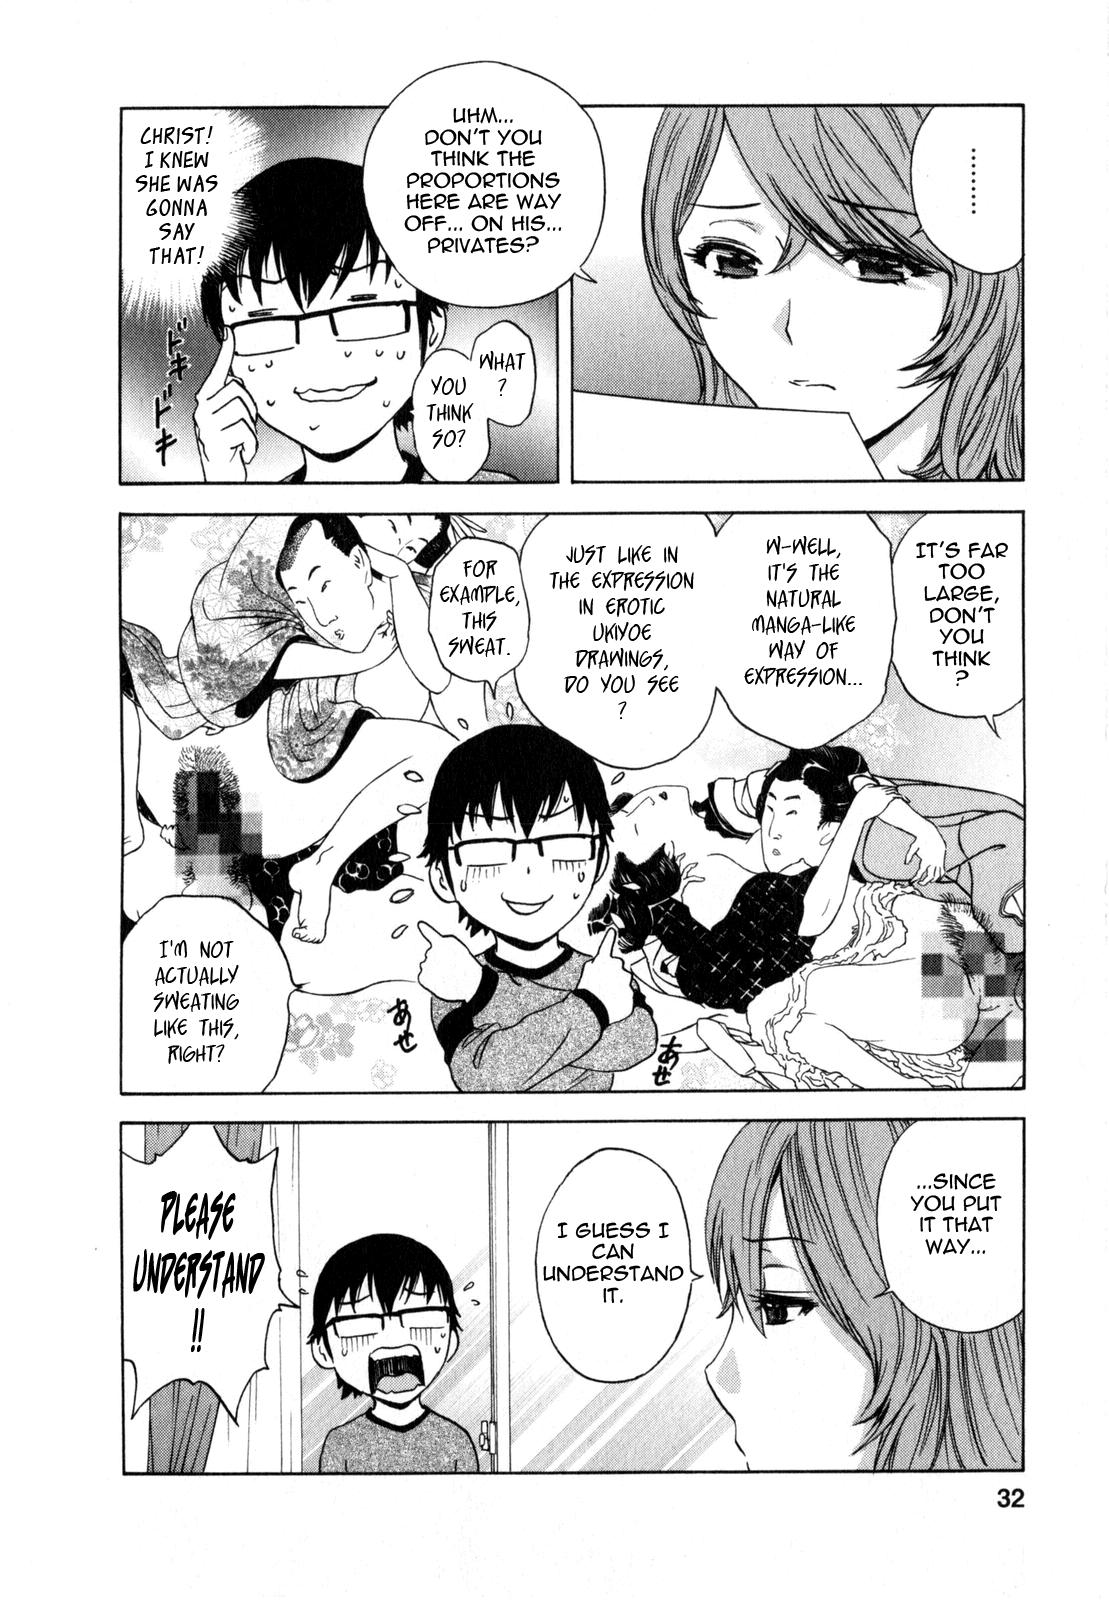 [Hidemaru] Life with Married Women Just Like a Manga 2 - Ch. 1-2 [English] {Tadanohito} 32